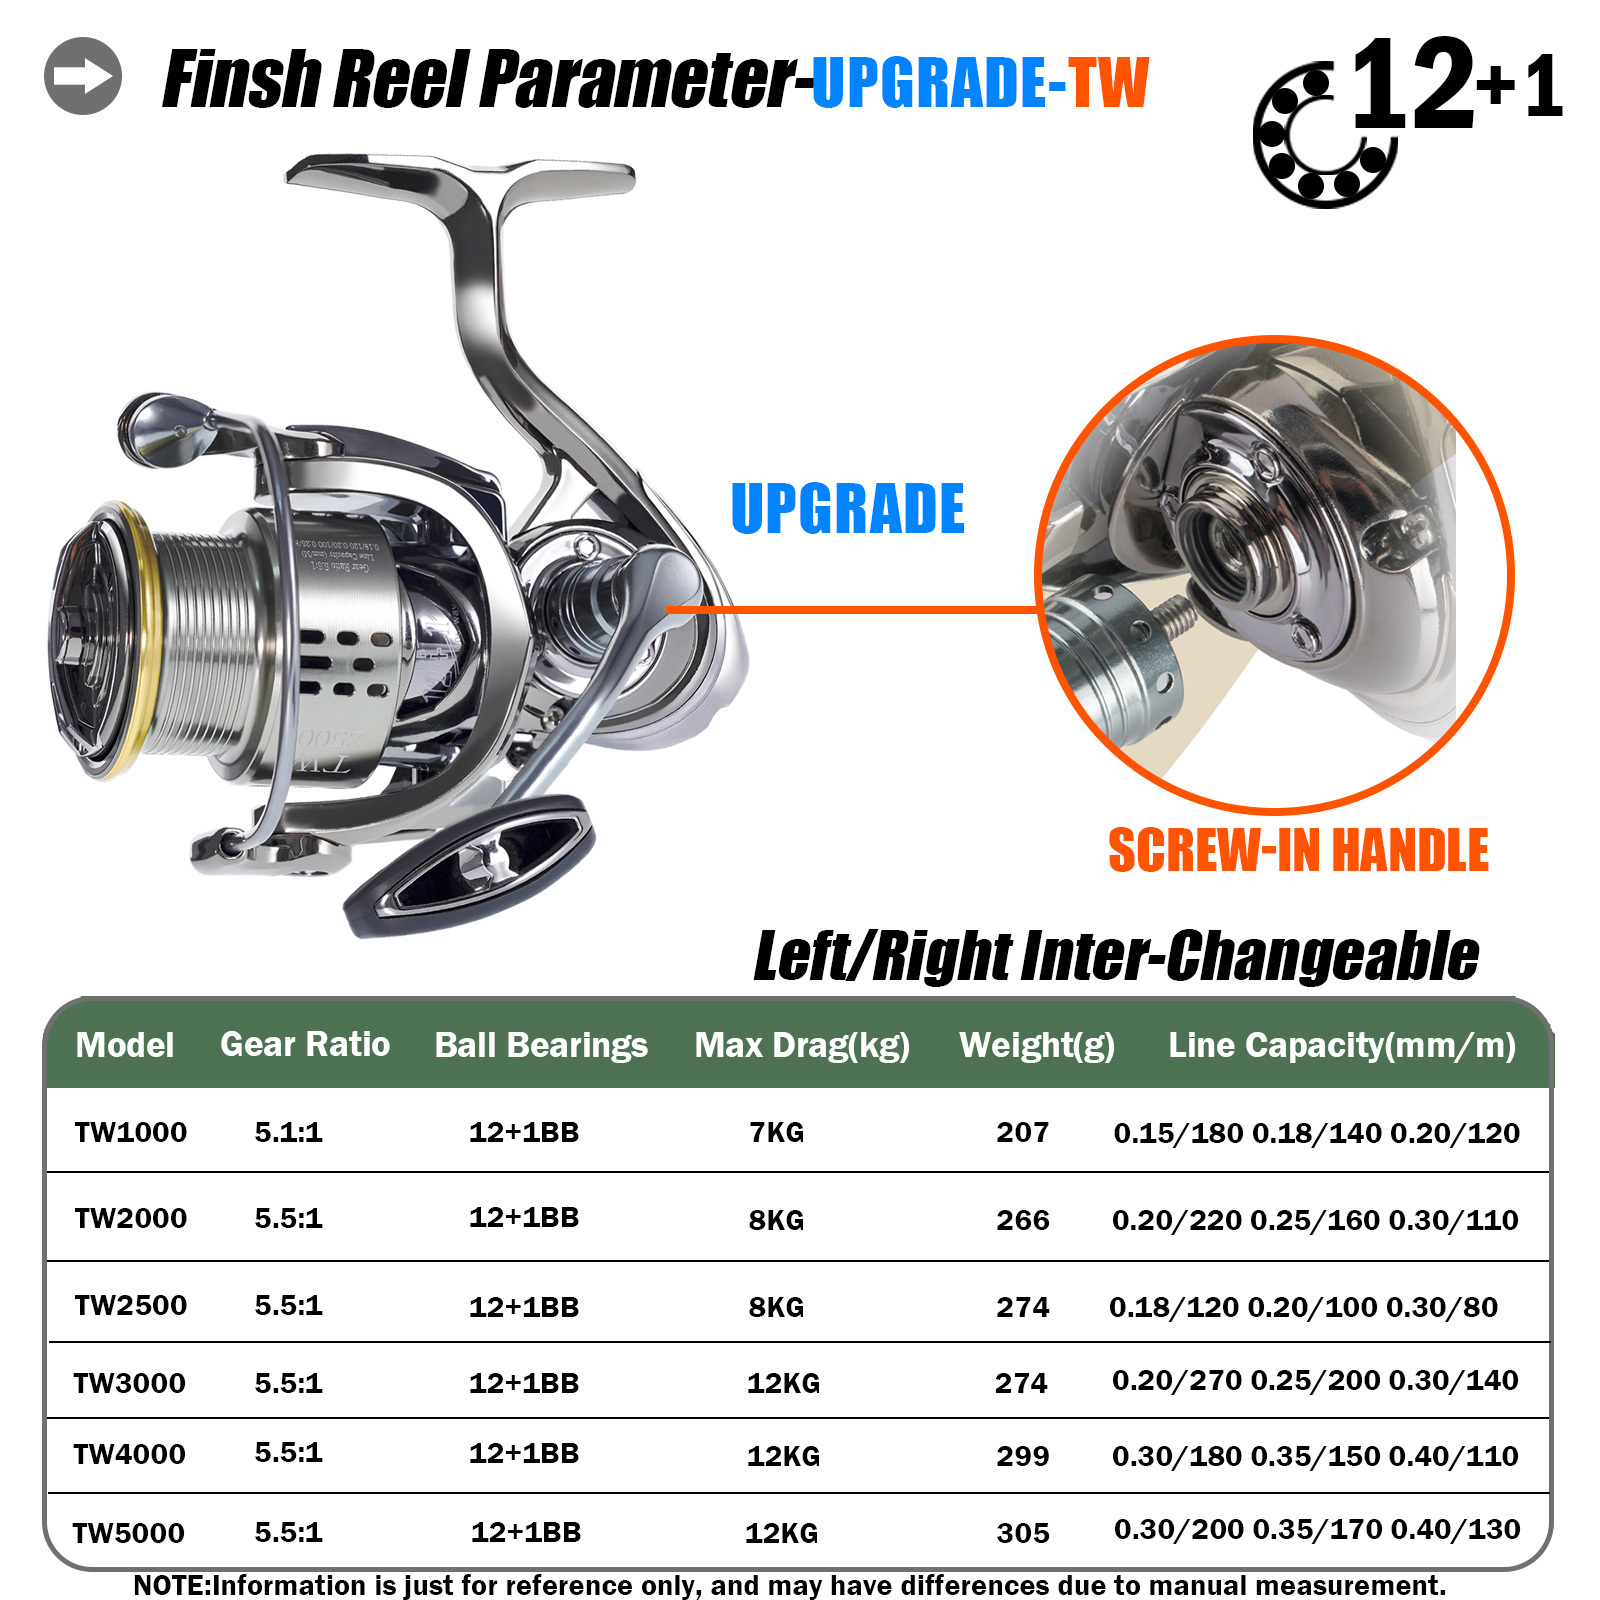 Fishing Reels Reel Gear Ratio 5.2:1/5.3:1/5.7:1/6.2:1 Max Drag 5